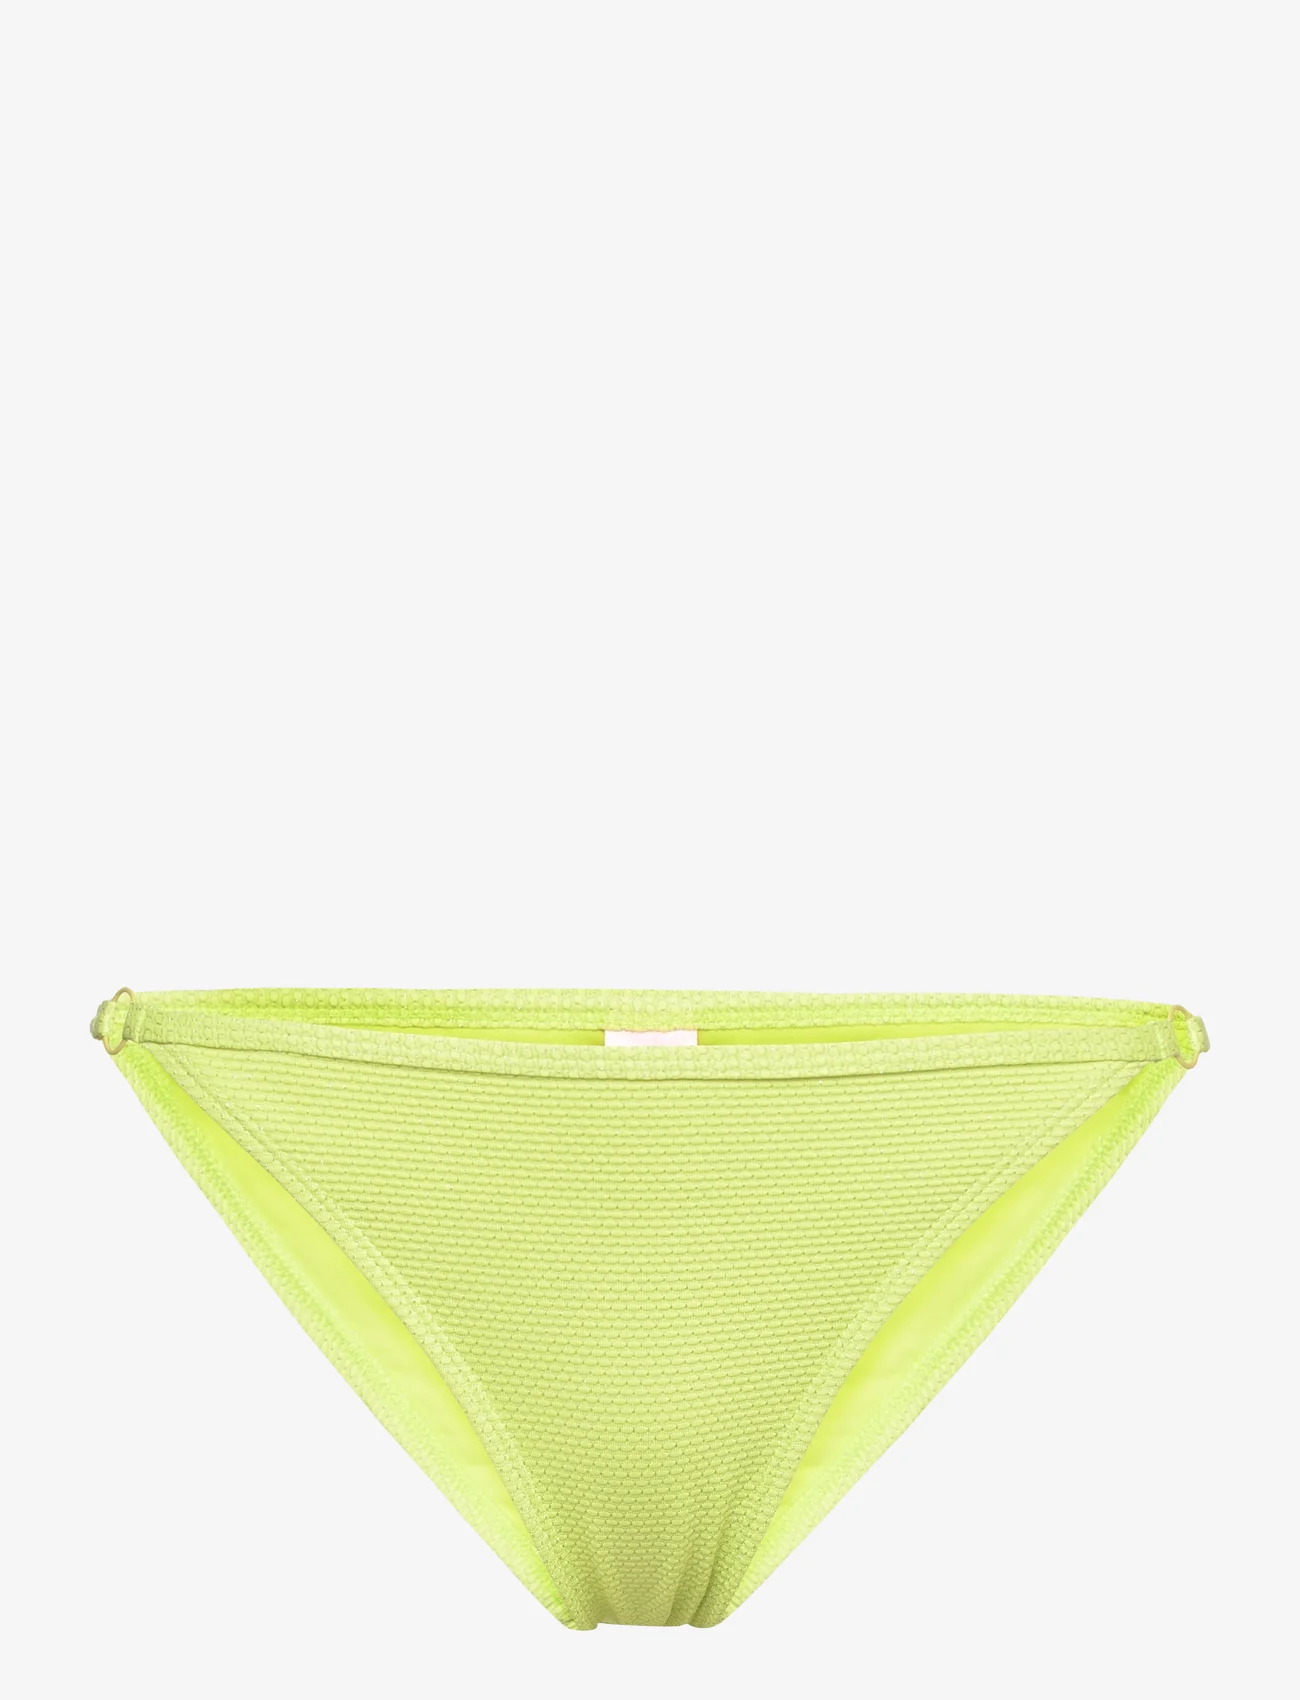 Hunkemöller - Fiji lurex cheeky t - bikinihousut - lime green - 0